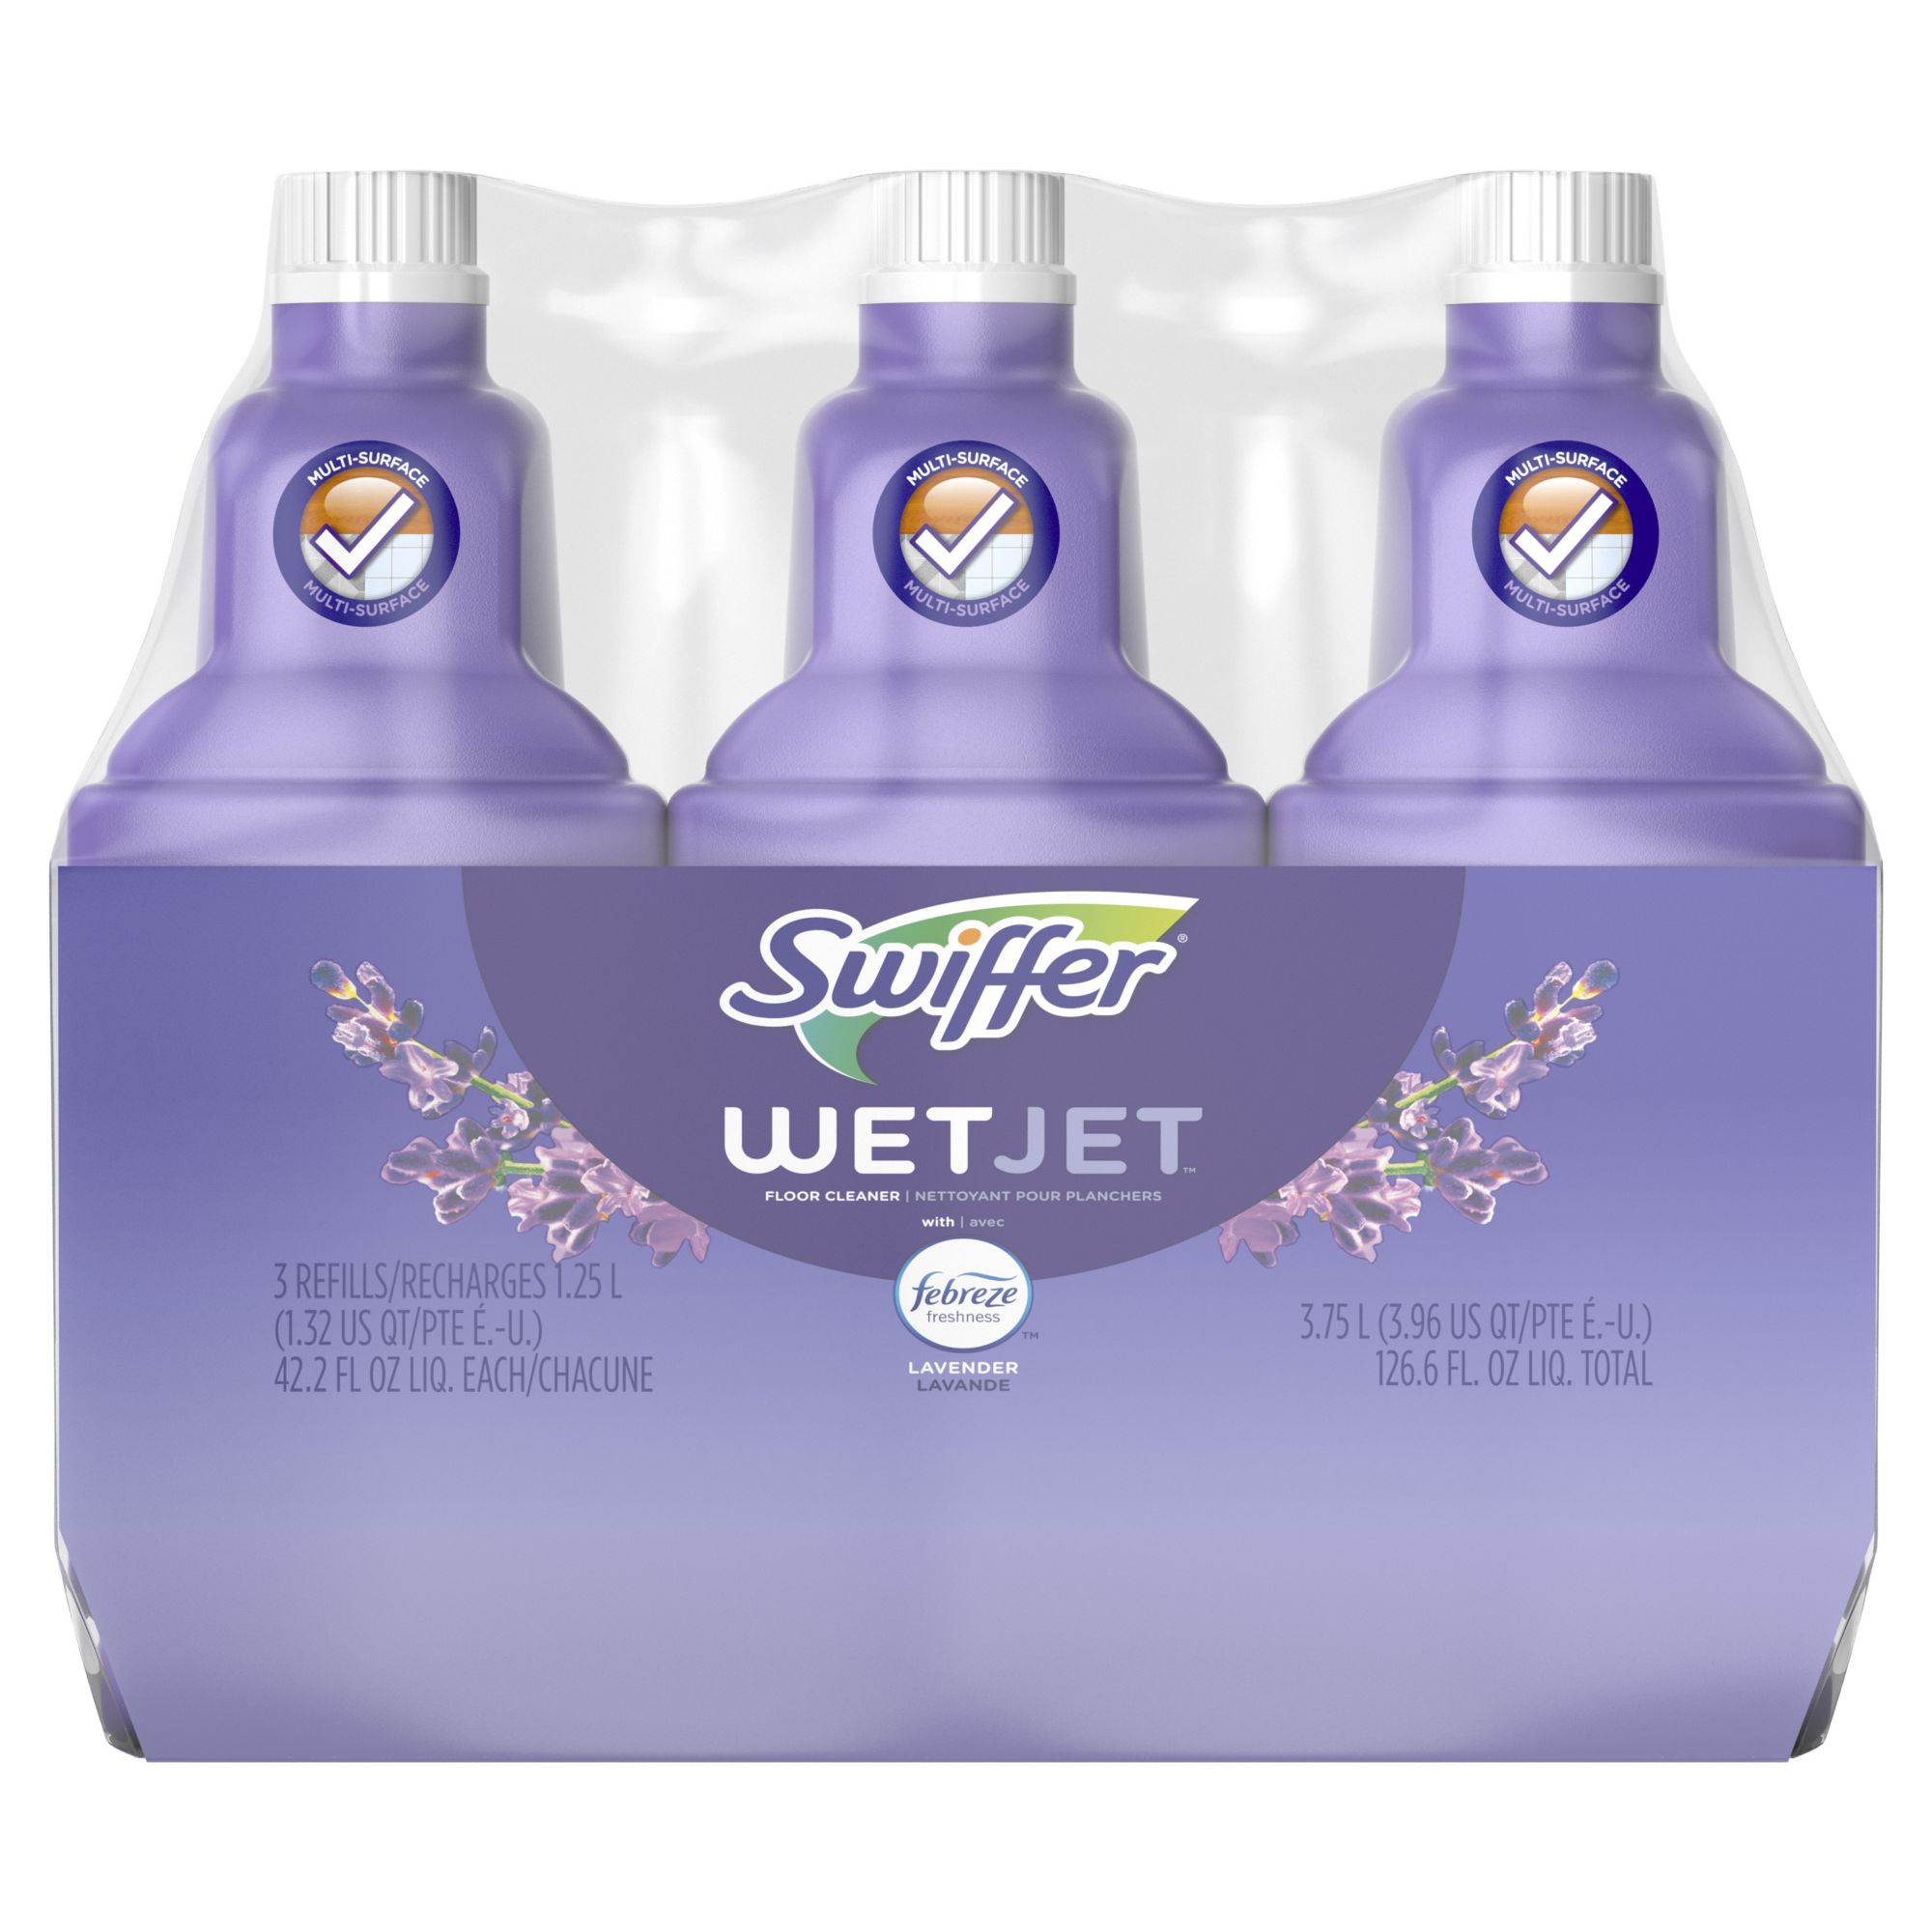 Swiffer WetJet Multi-purpose Floor Cleaner Solution, Febreze Lavender Vanilla and Comfort Scent, 3 ct./1.25L